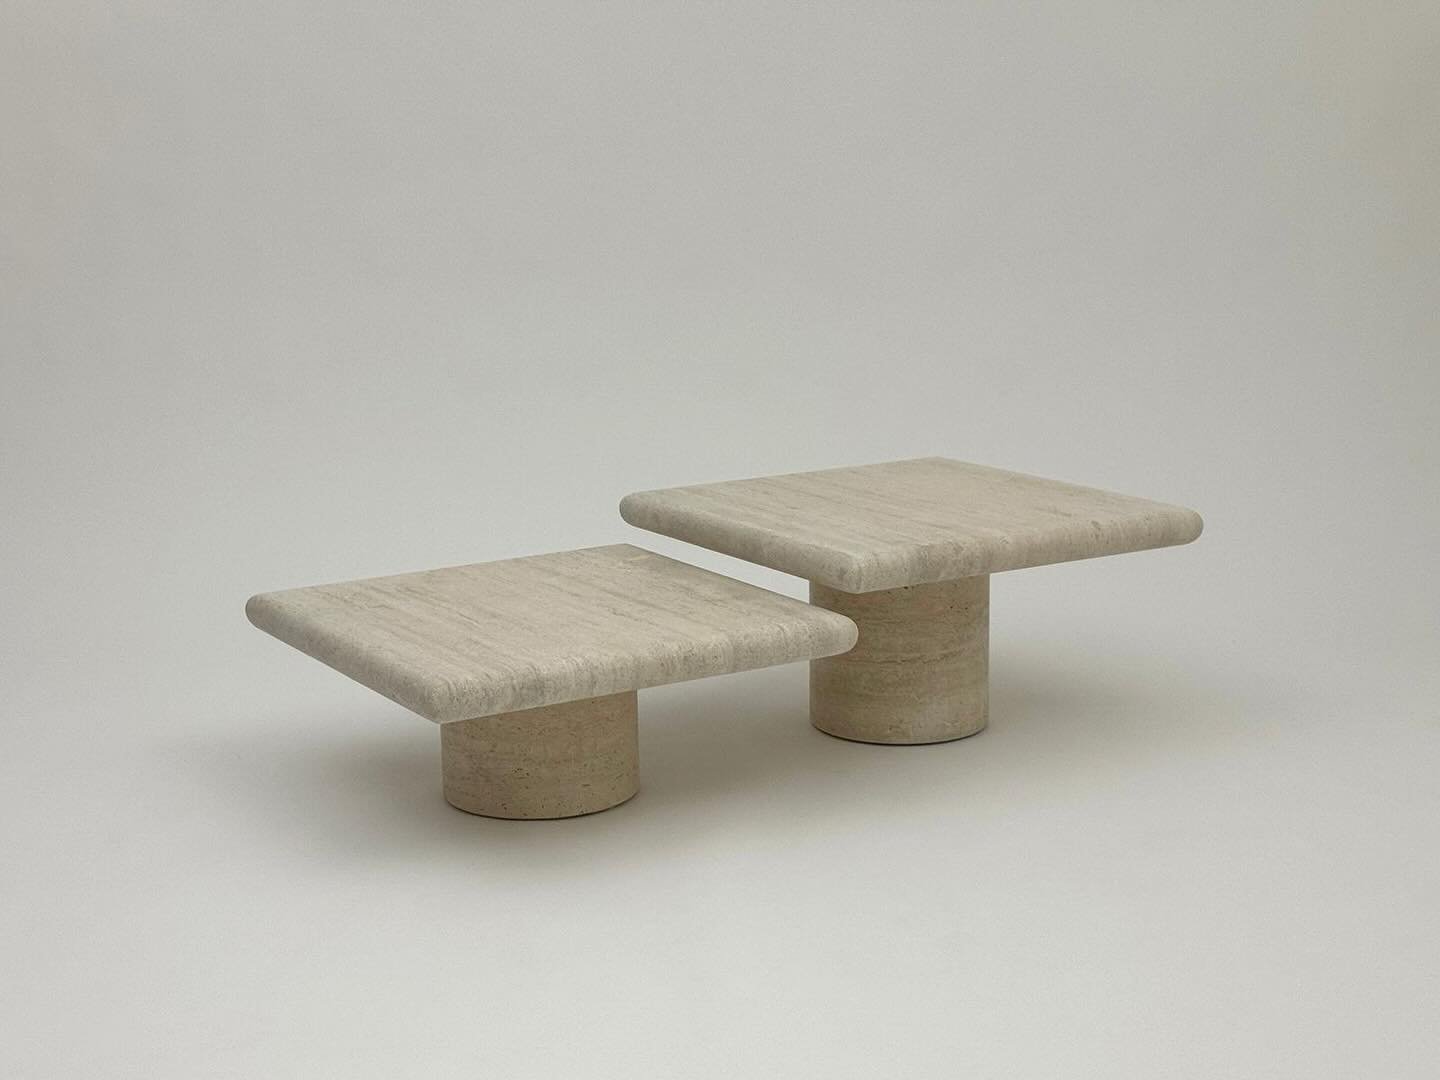 VV l Angelo Mangiarotti Italia Travertine Side Table Set 1970&rsquo;s

#vvinteriorhome #interiorstylist #1stdibs #interiordesign #moderndesign #contemporarydesign